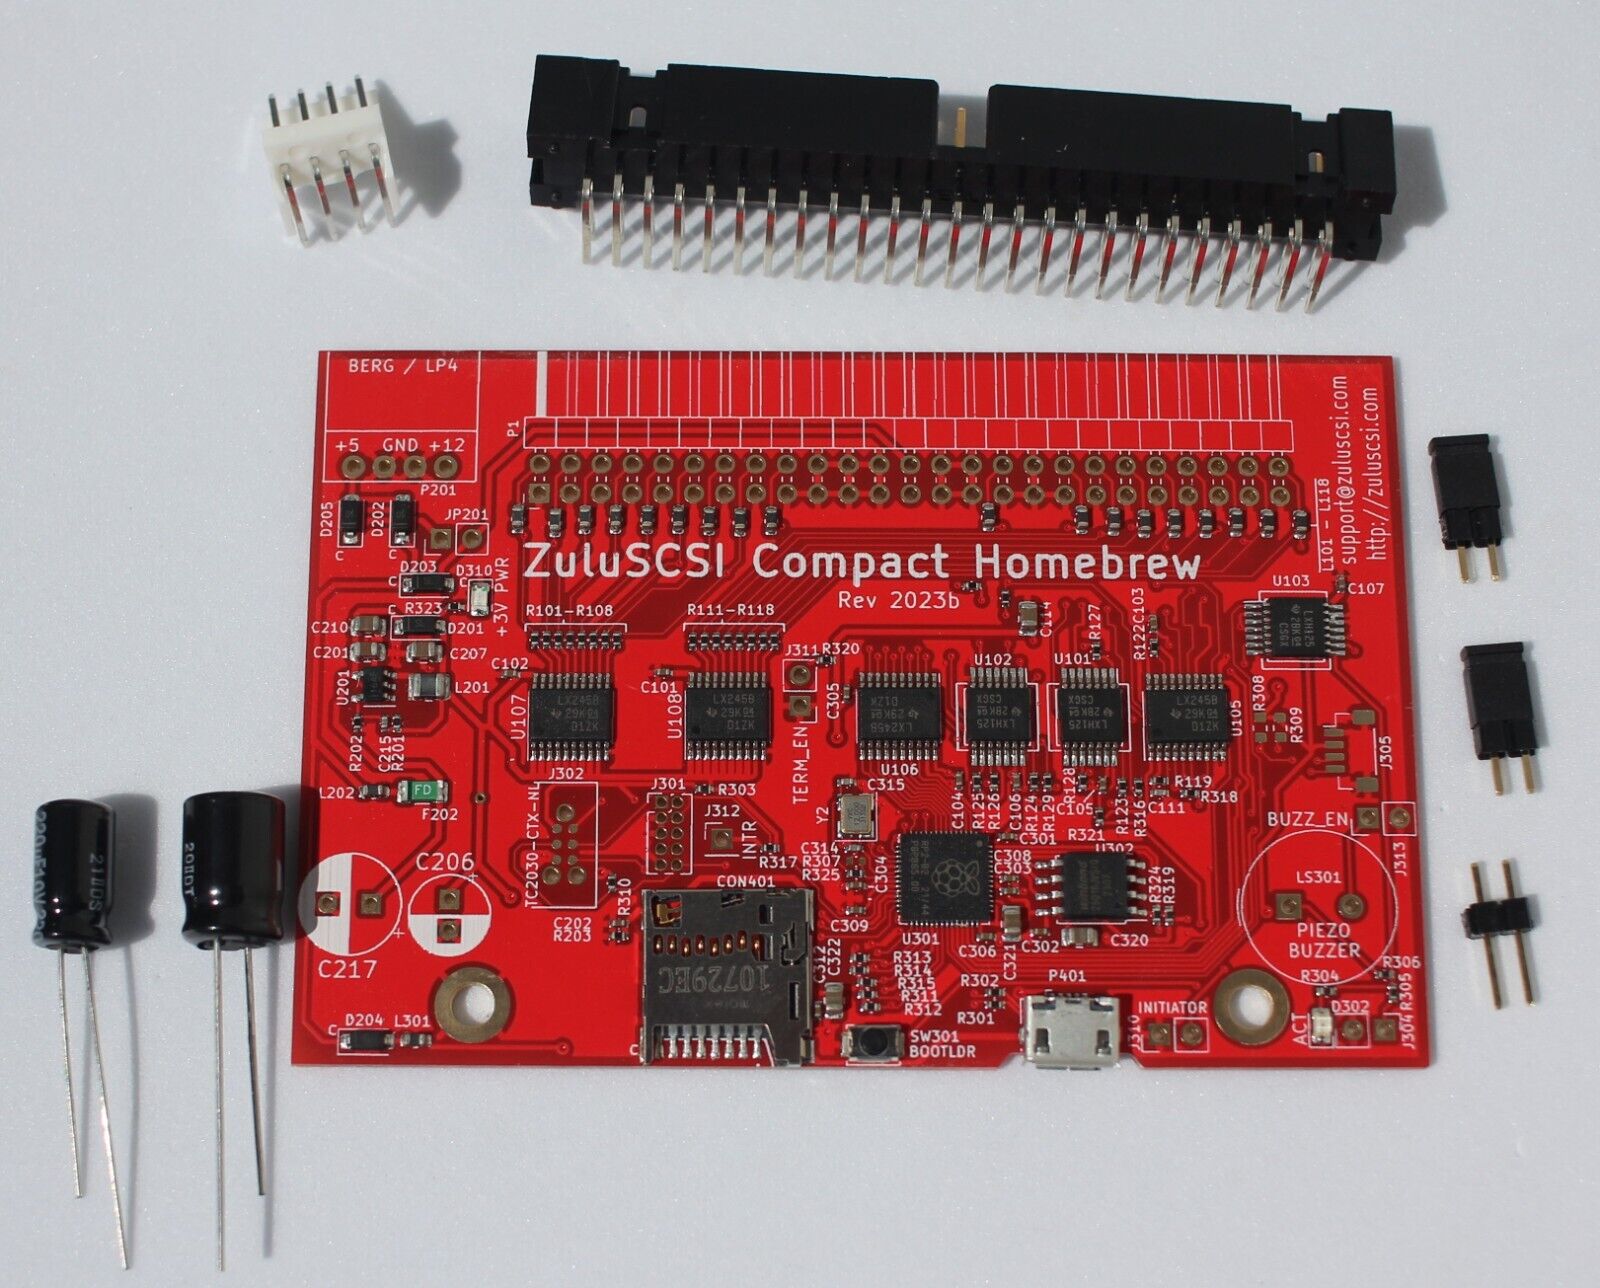 ZuluSCSI Compact Homebrew kit - an RP2040-powered hard drive emulator